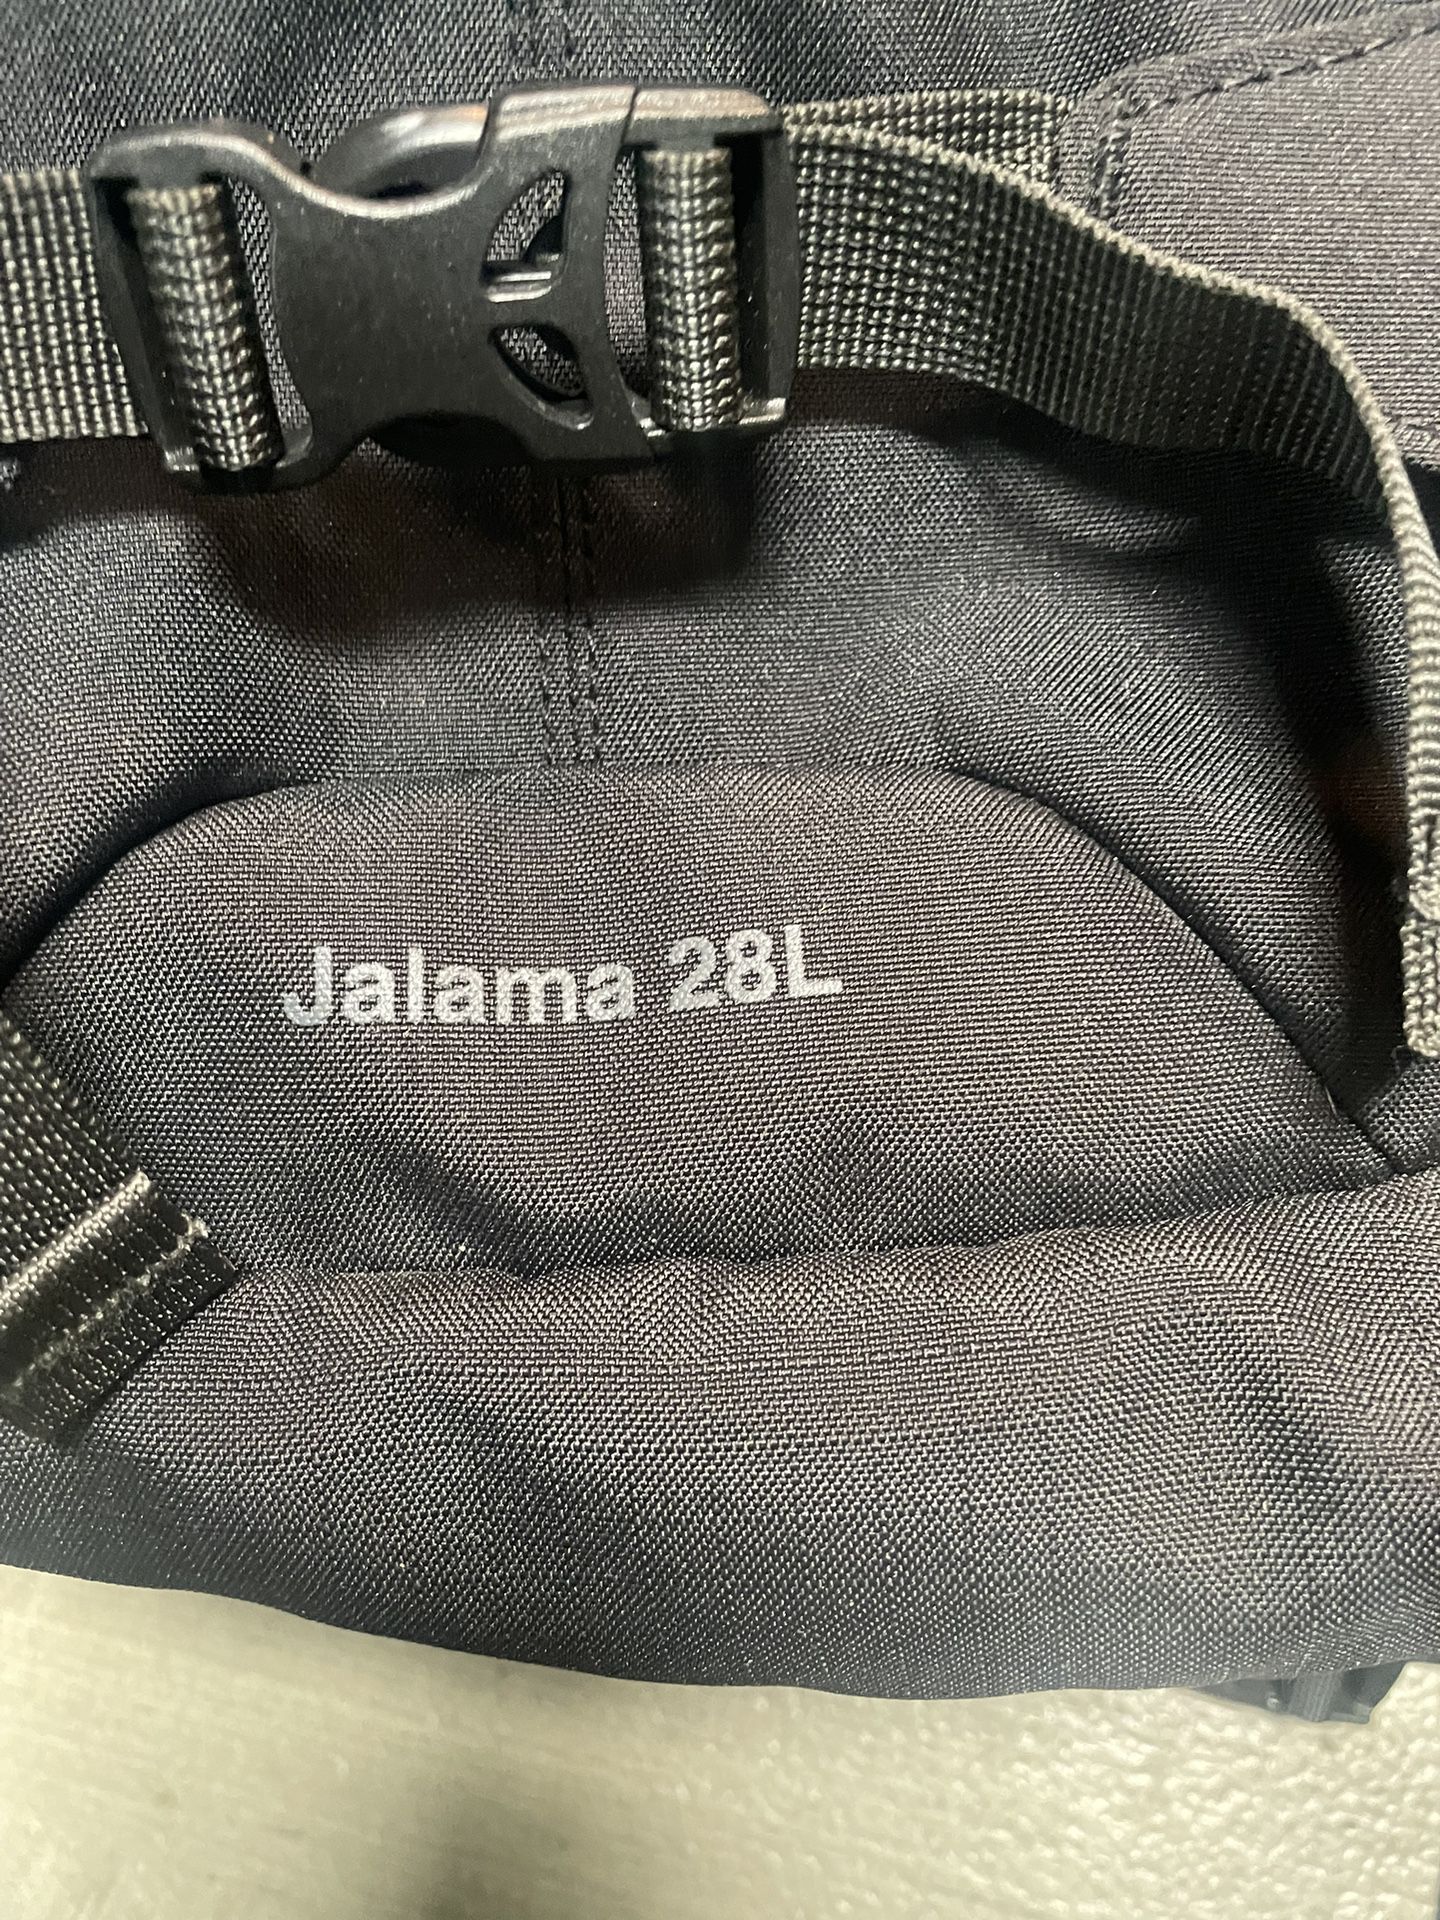  Brand New Patagonia Backpack